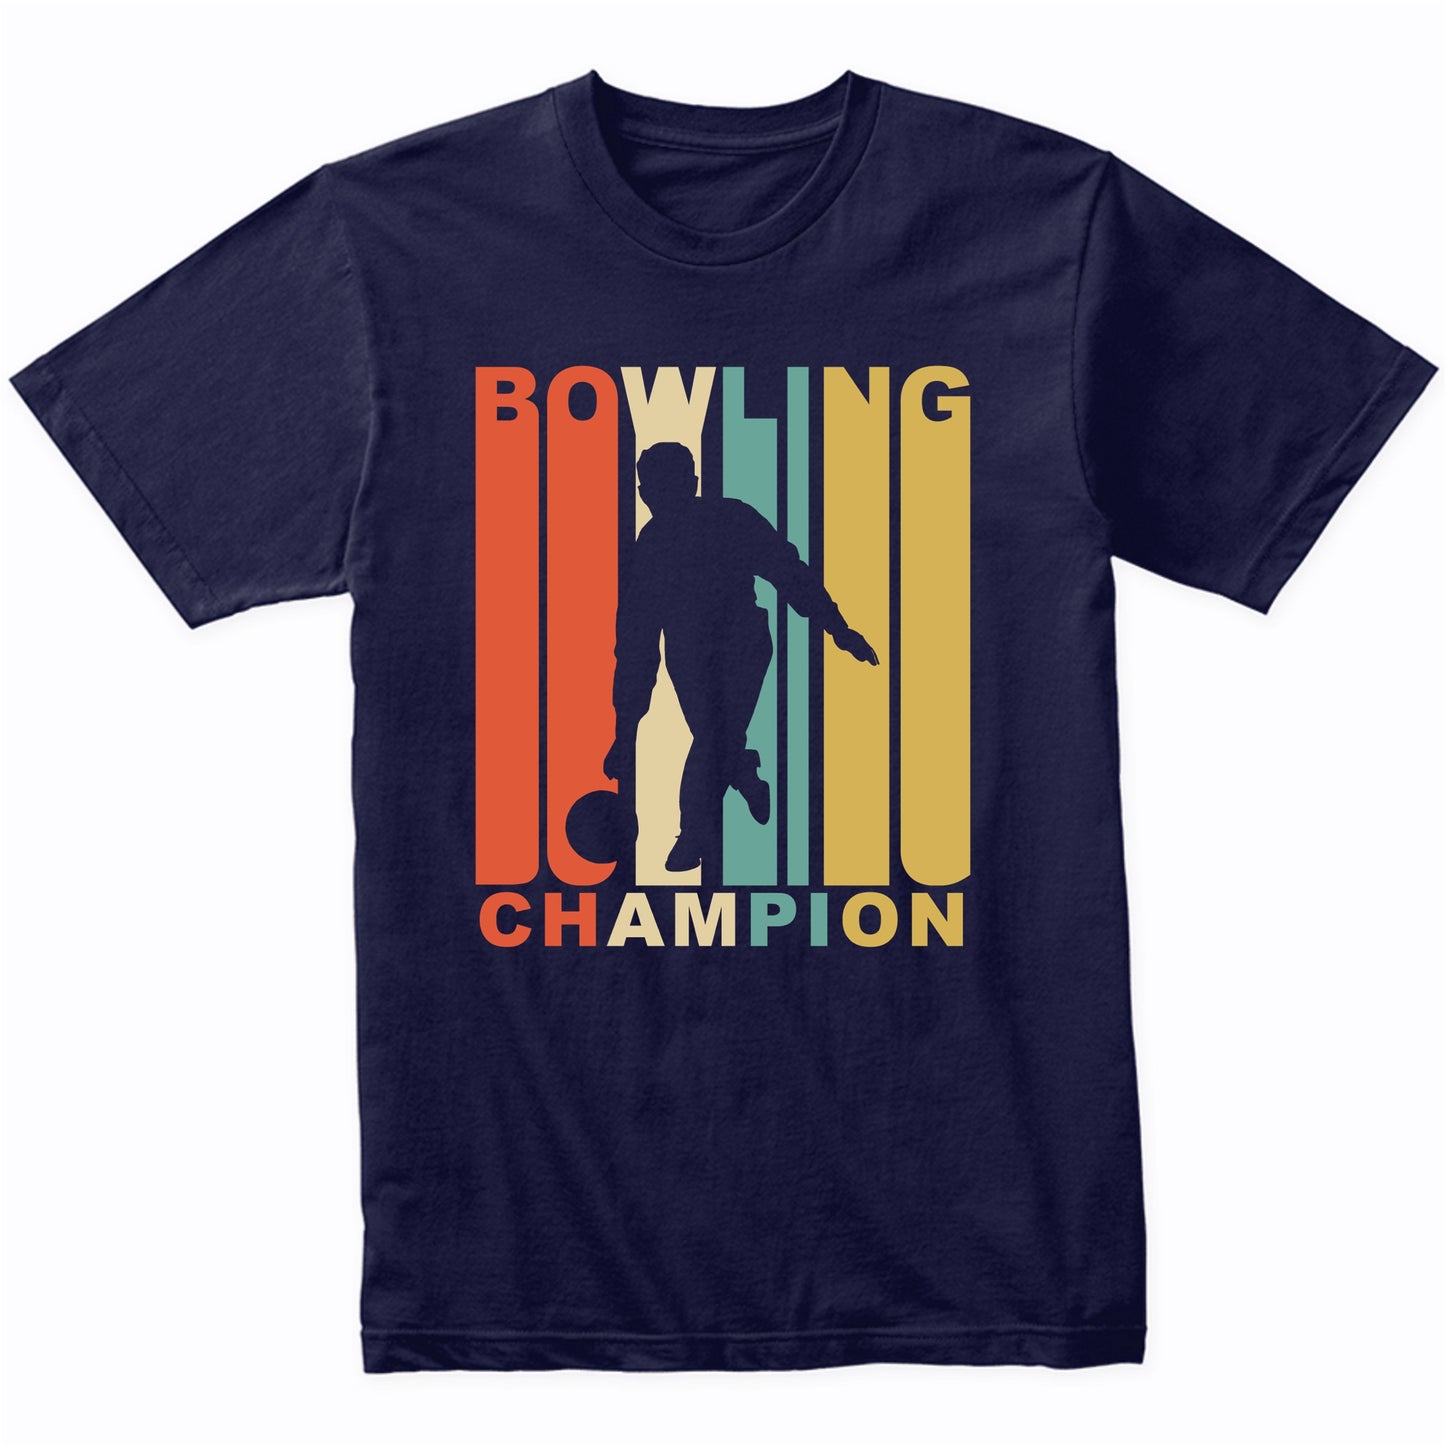 Vintage 1970's Style Bowling Champion Retro Bowler T-Shirt